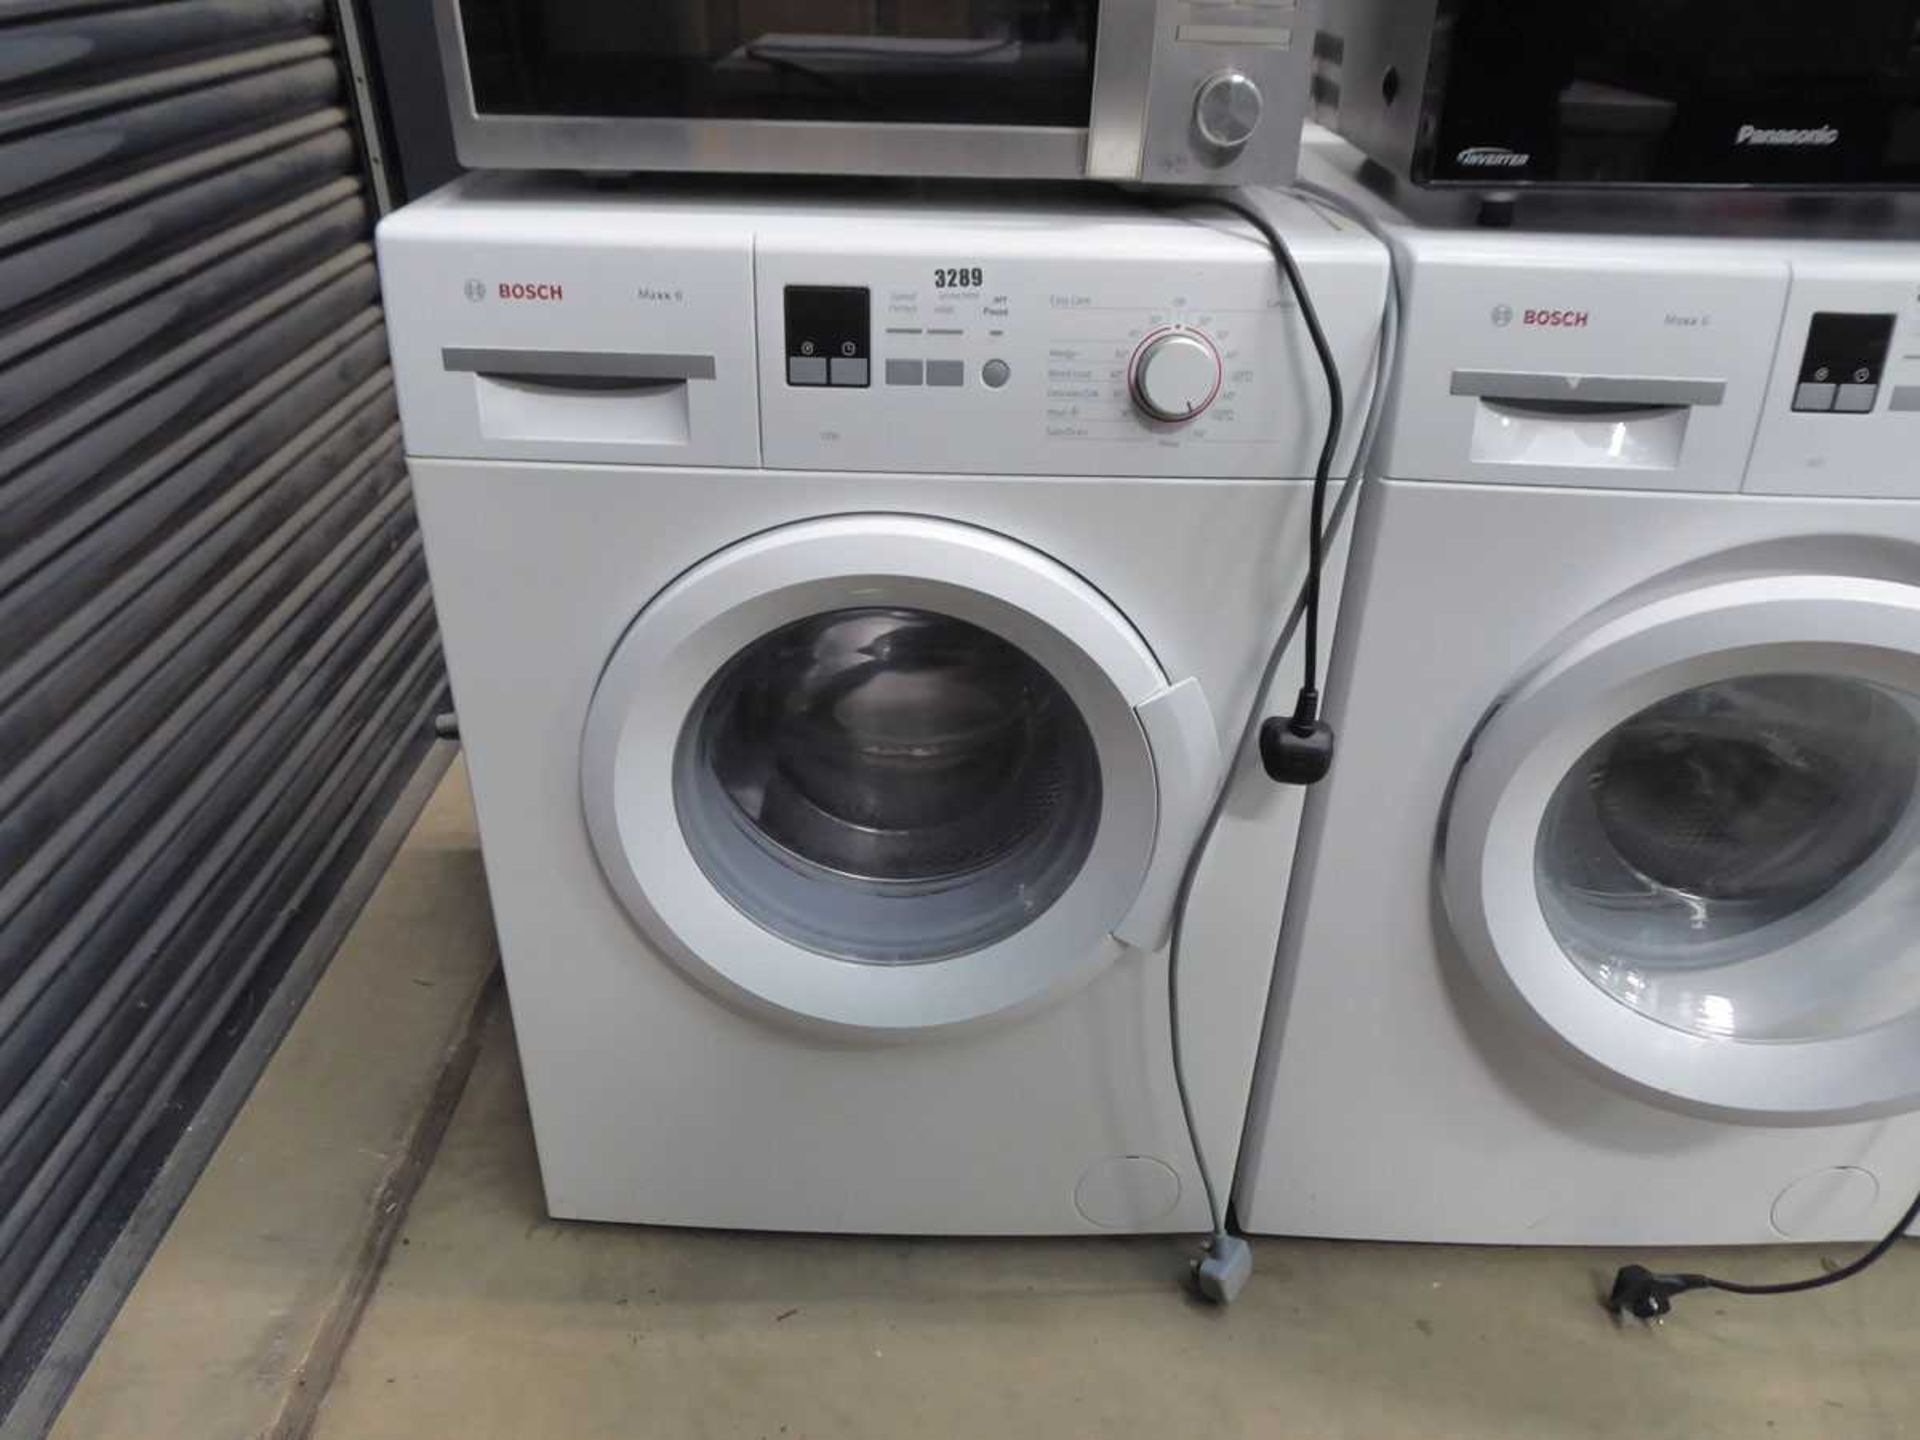 Bosch Max 6 washing machine